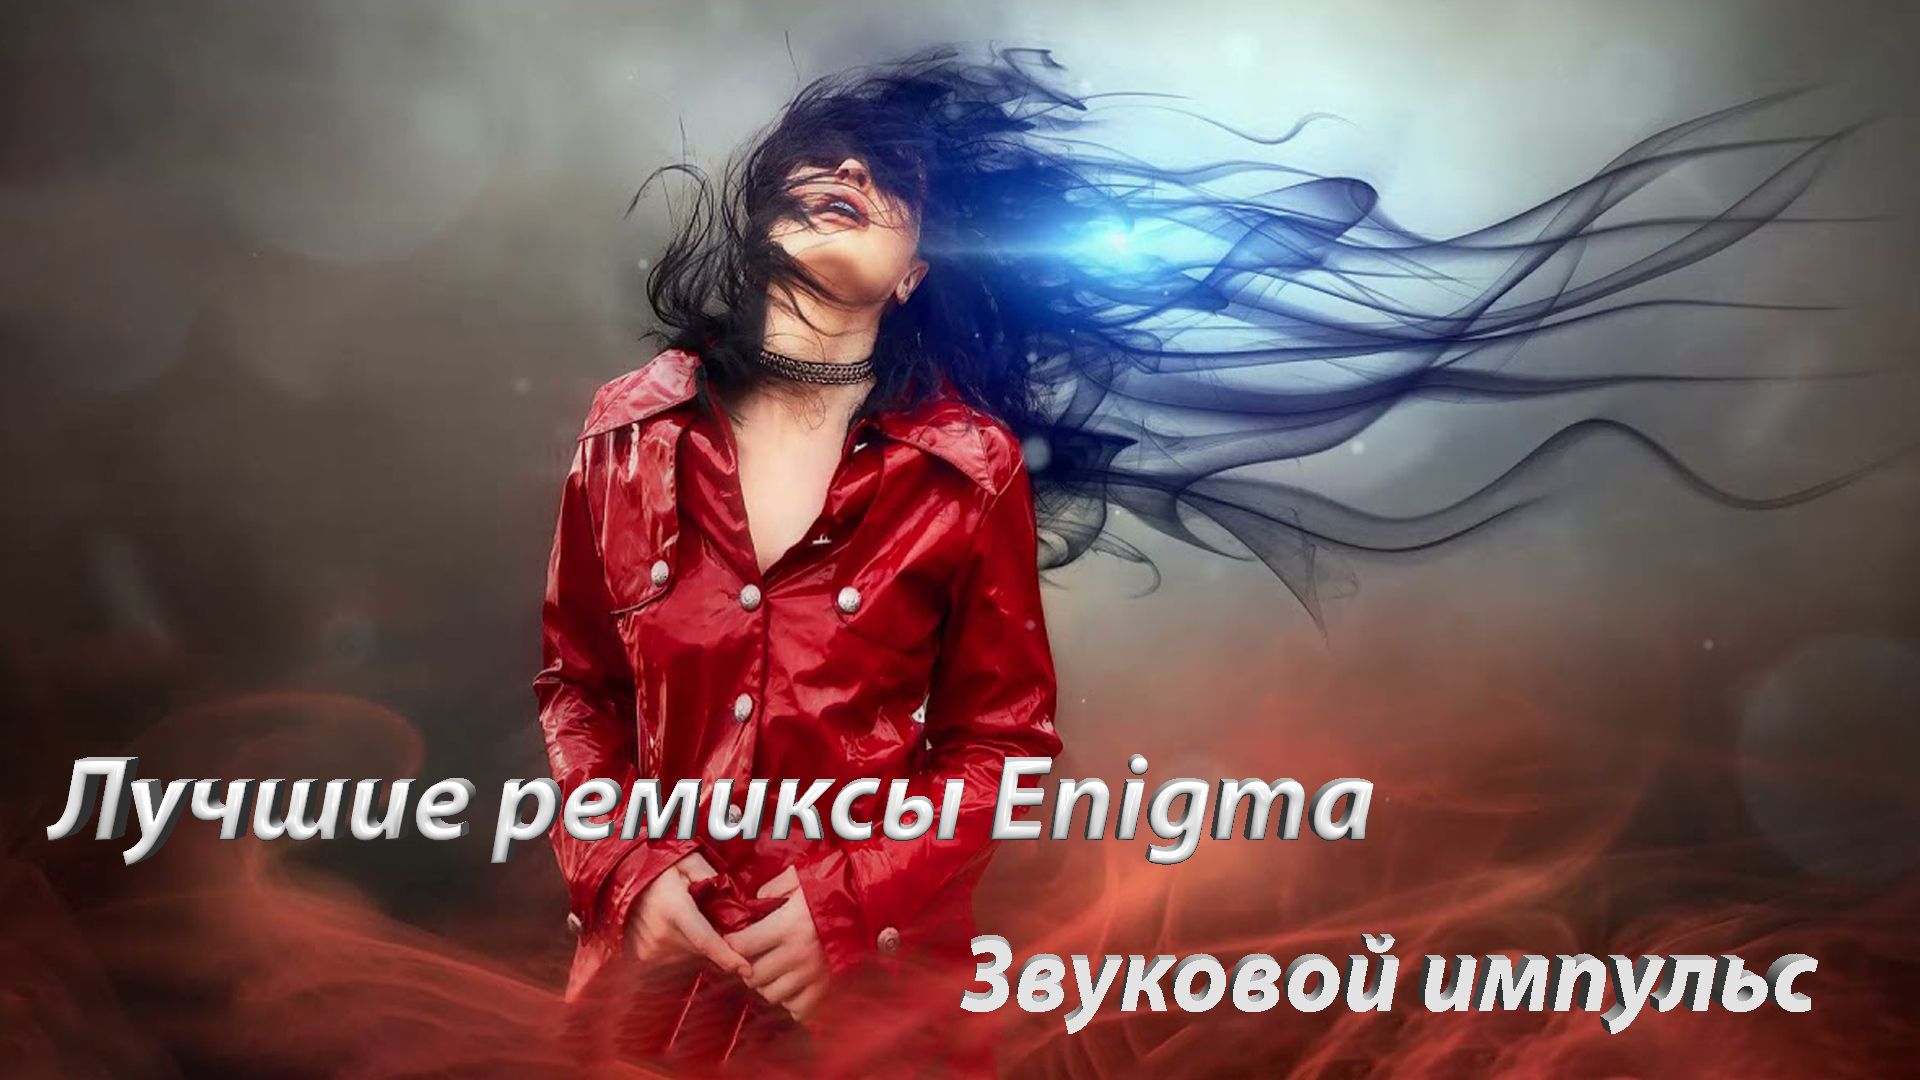 Ремикс, Enigma ремикс, Слушать песни онлайн, Дискотека, Яндекс музыка.